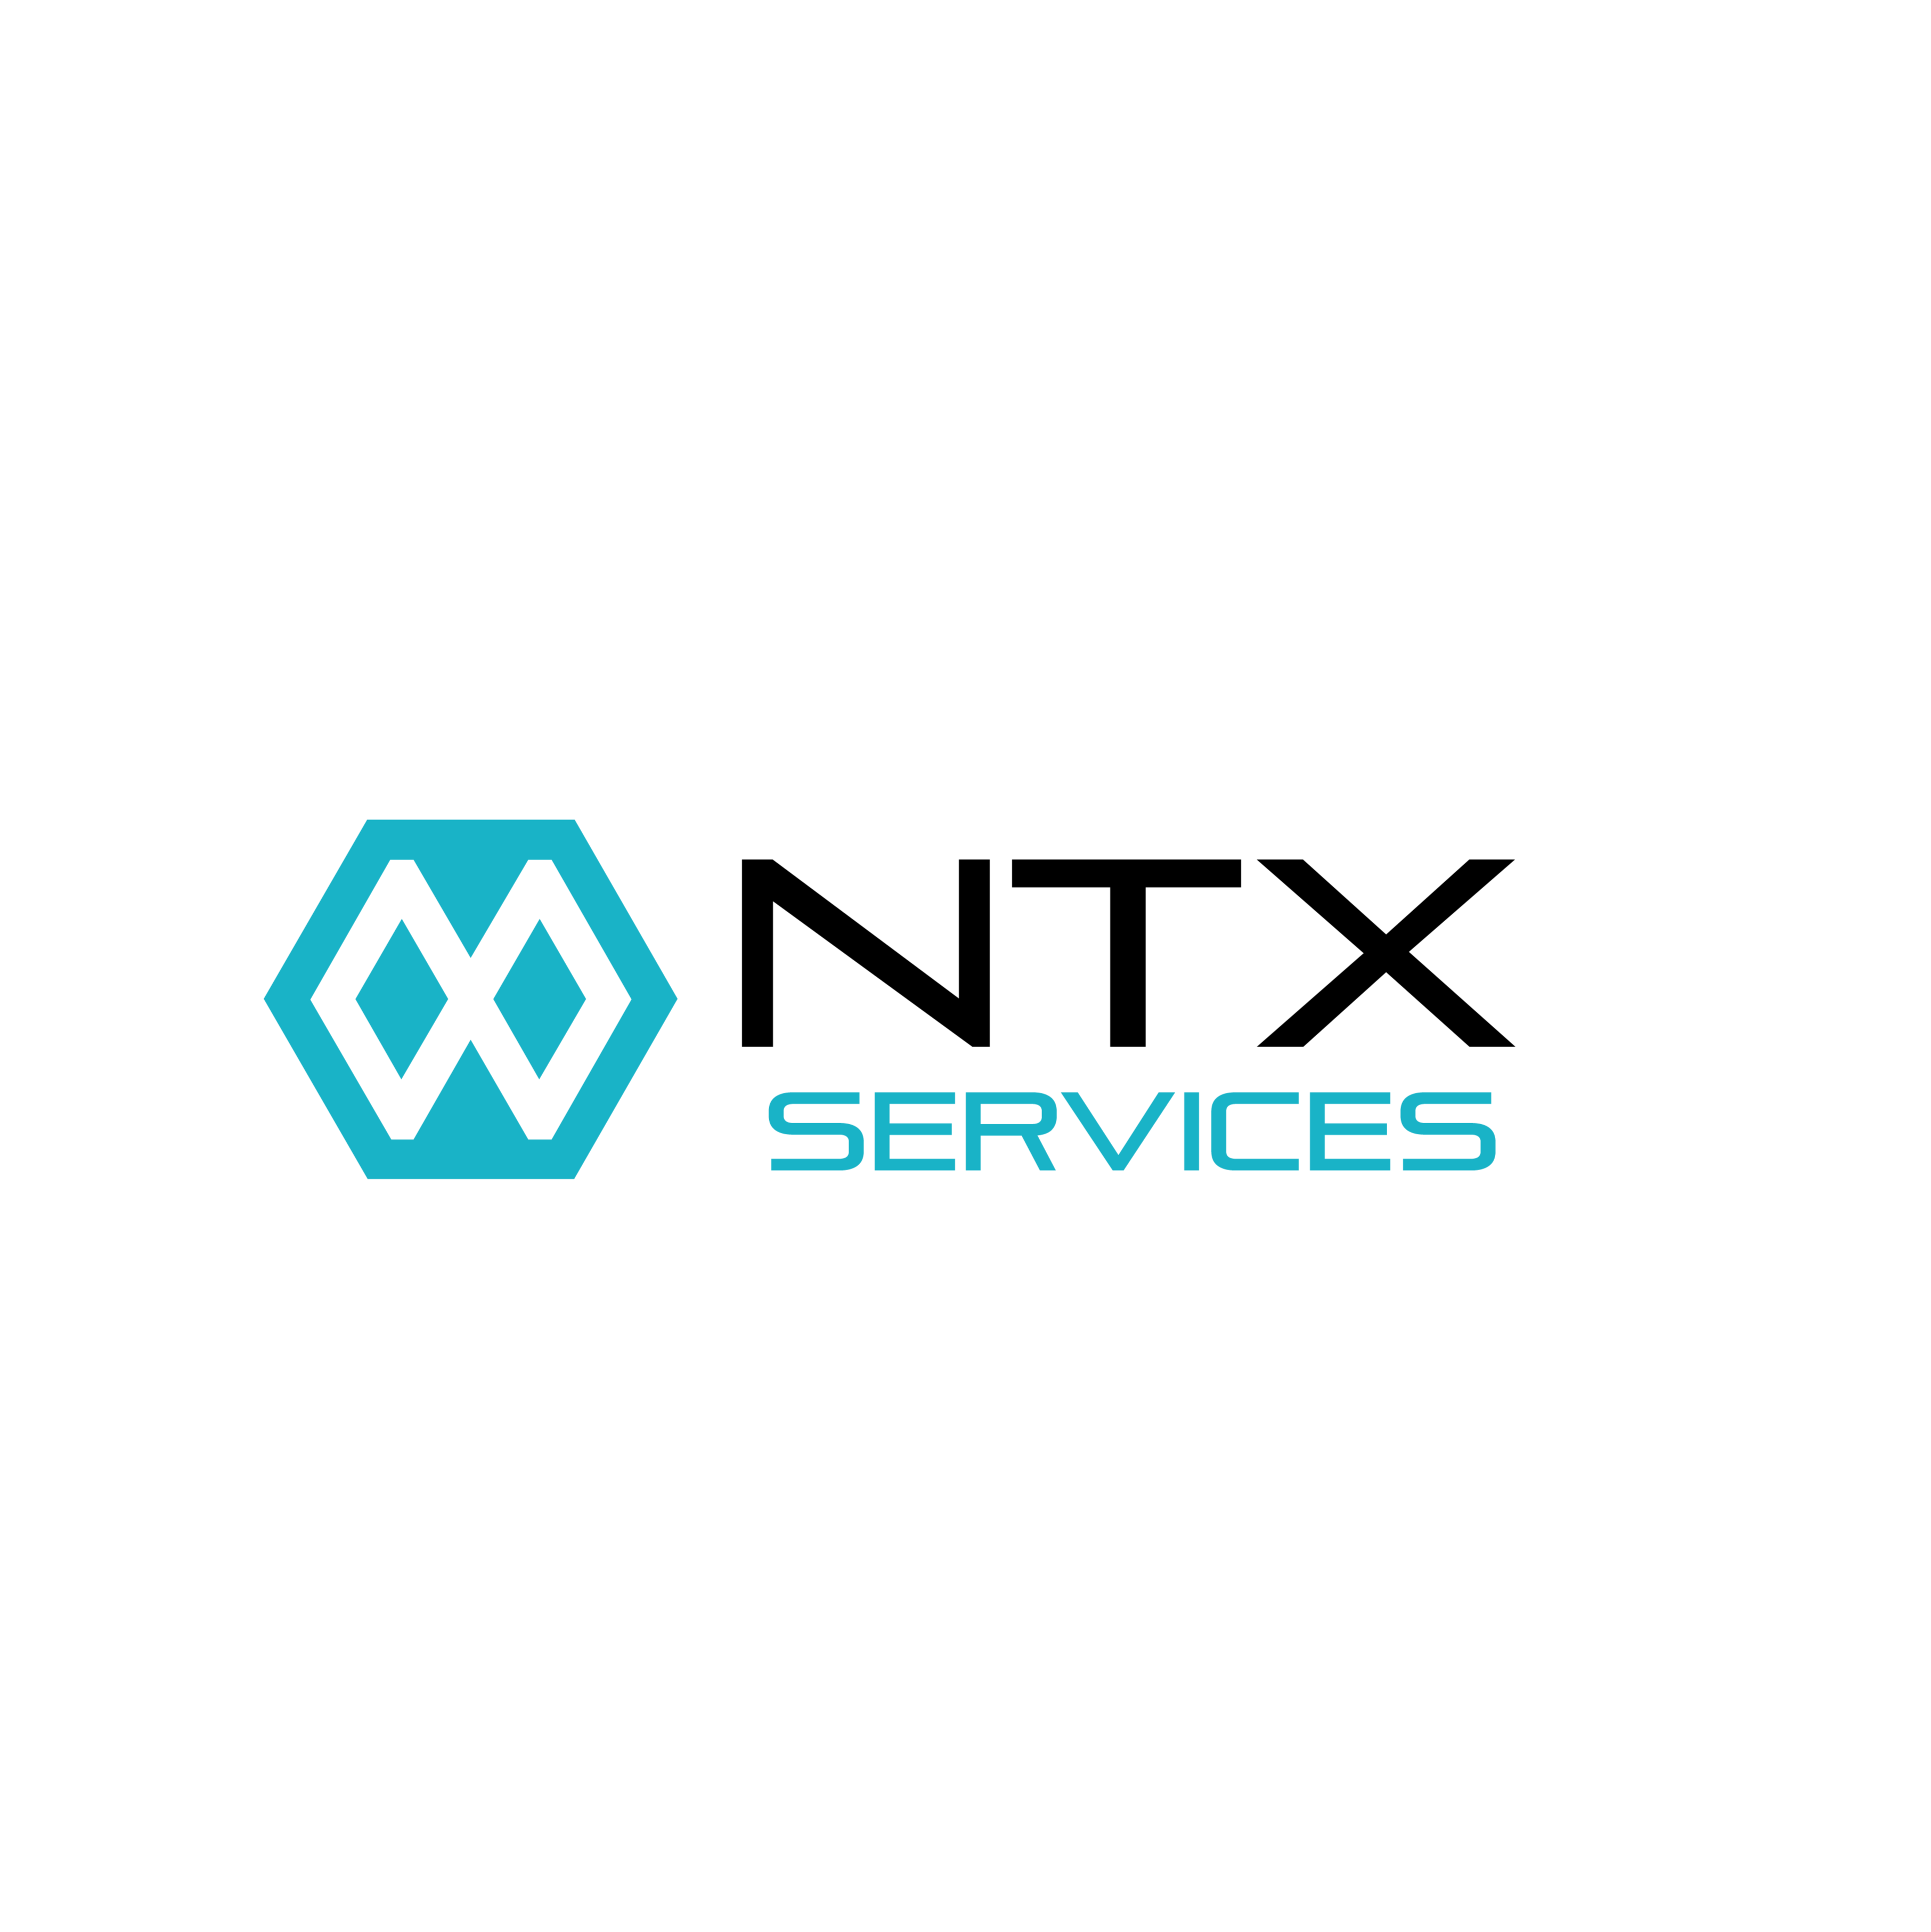 NeuroTechX Services Inc